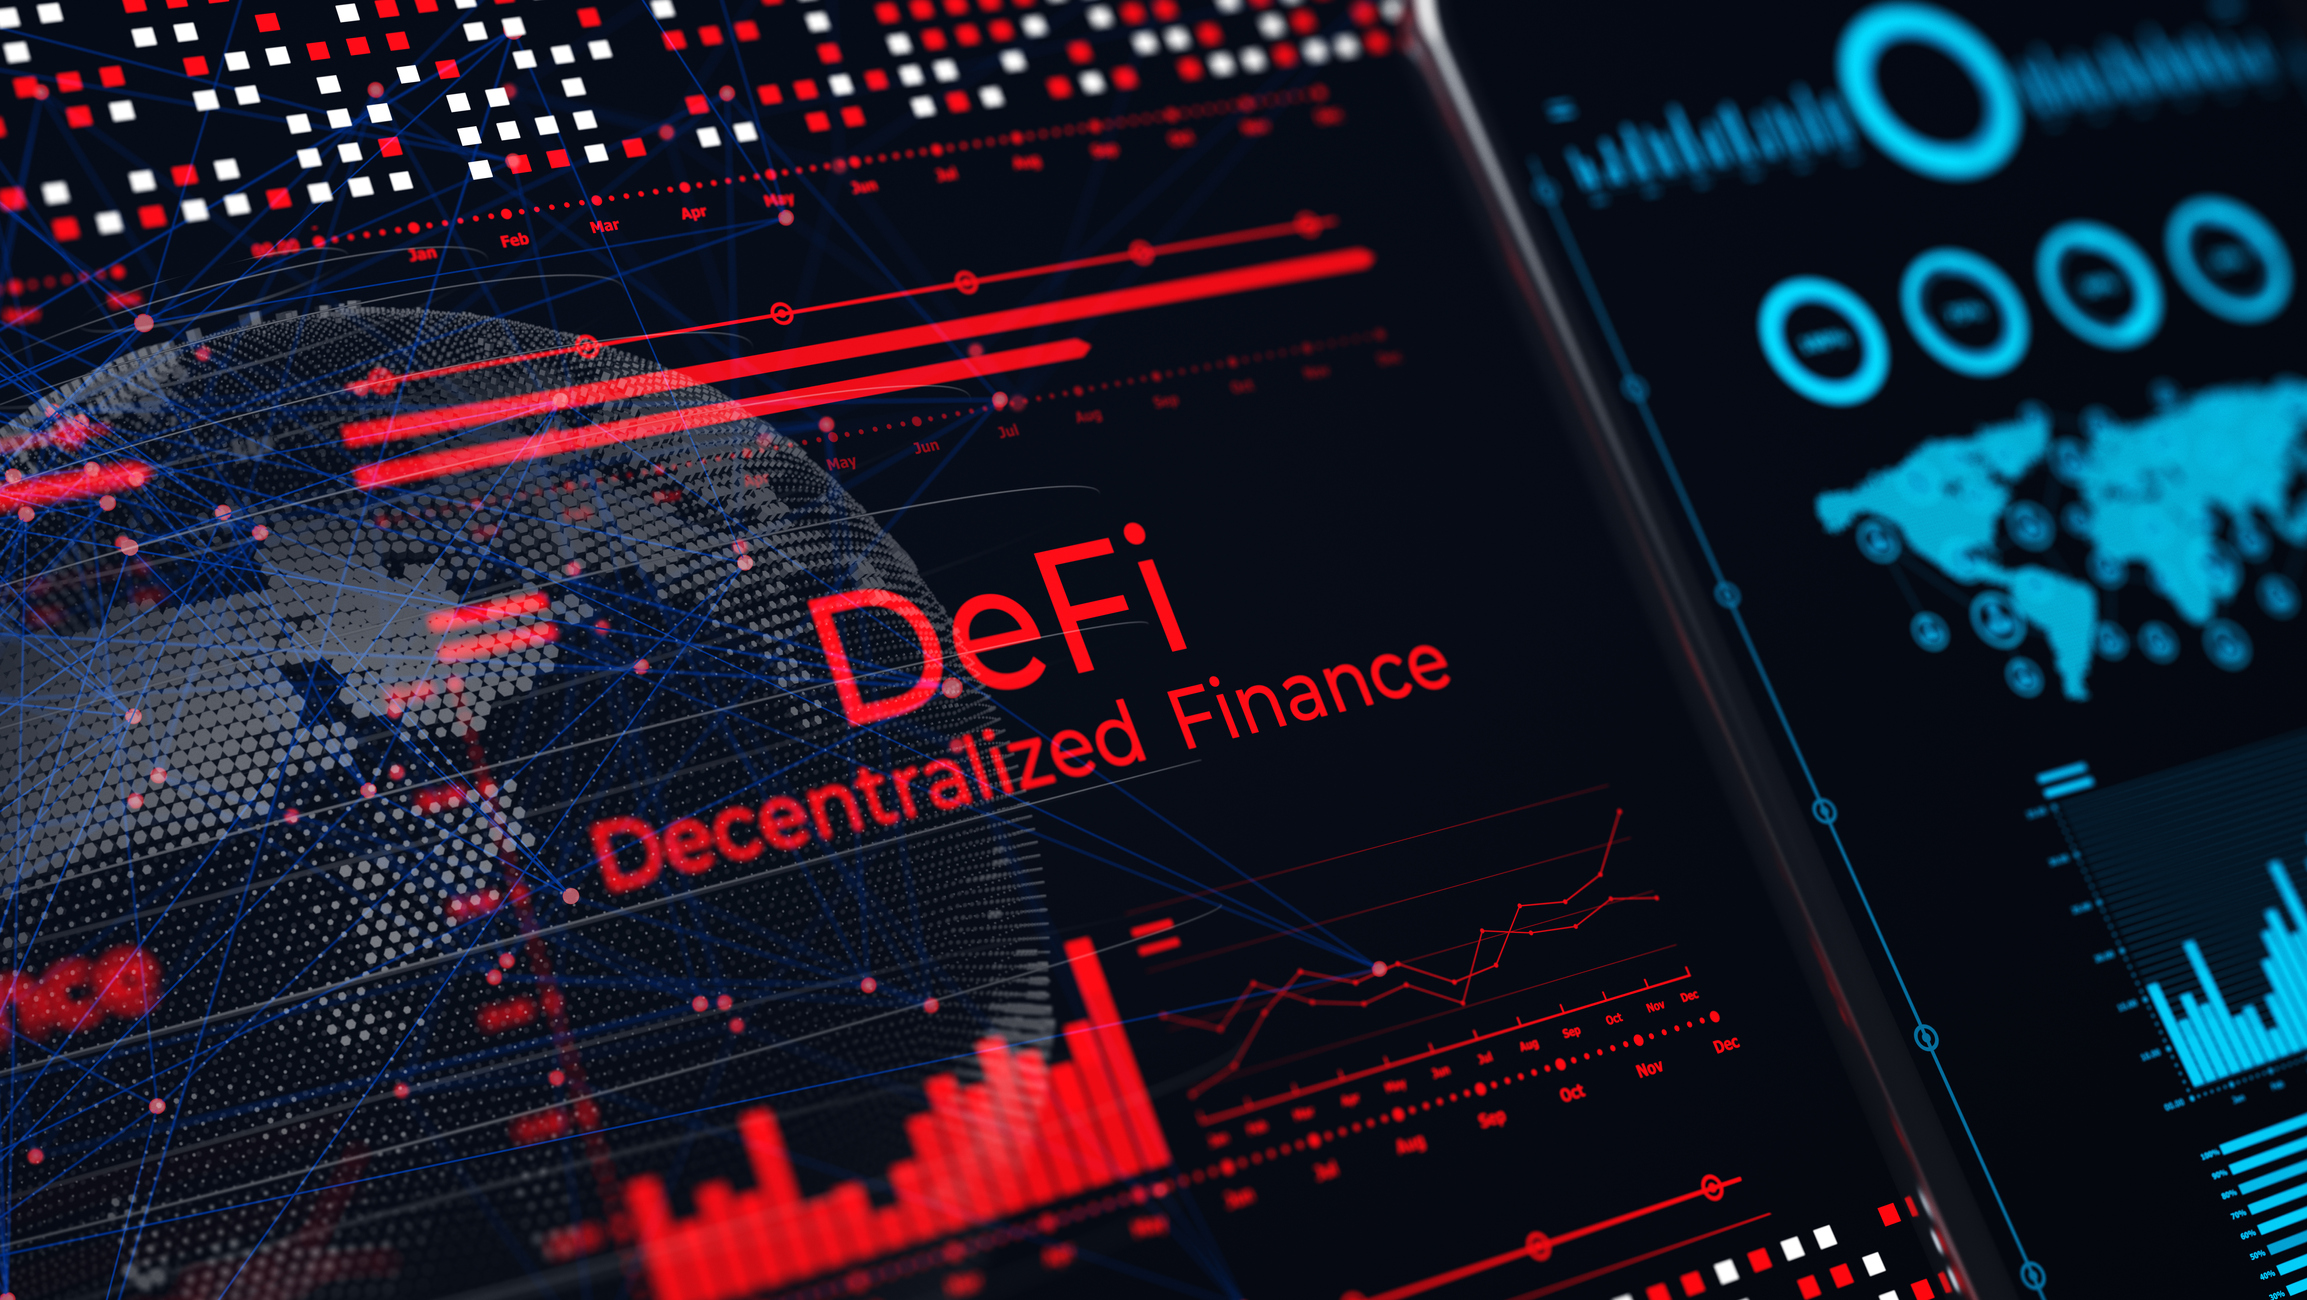 Plataforma cripto hackeada Wintermute tem R$ 1 bilhão em dívidas DeFi, mostram rastros em blockchain